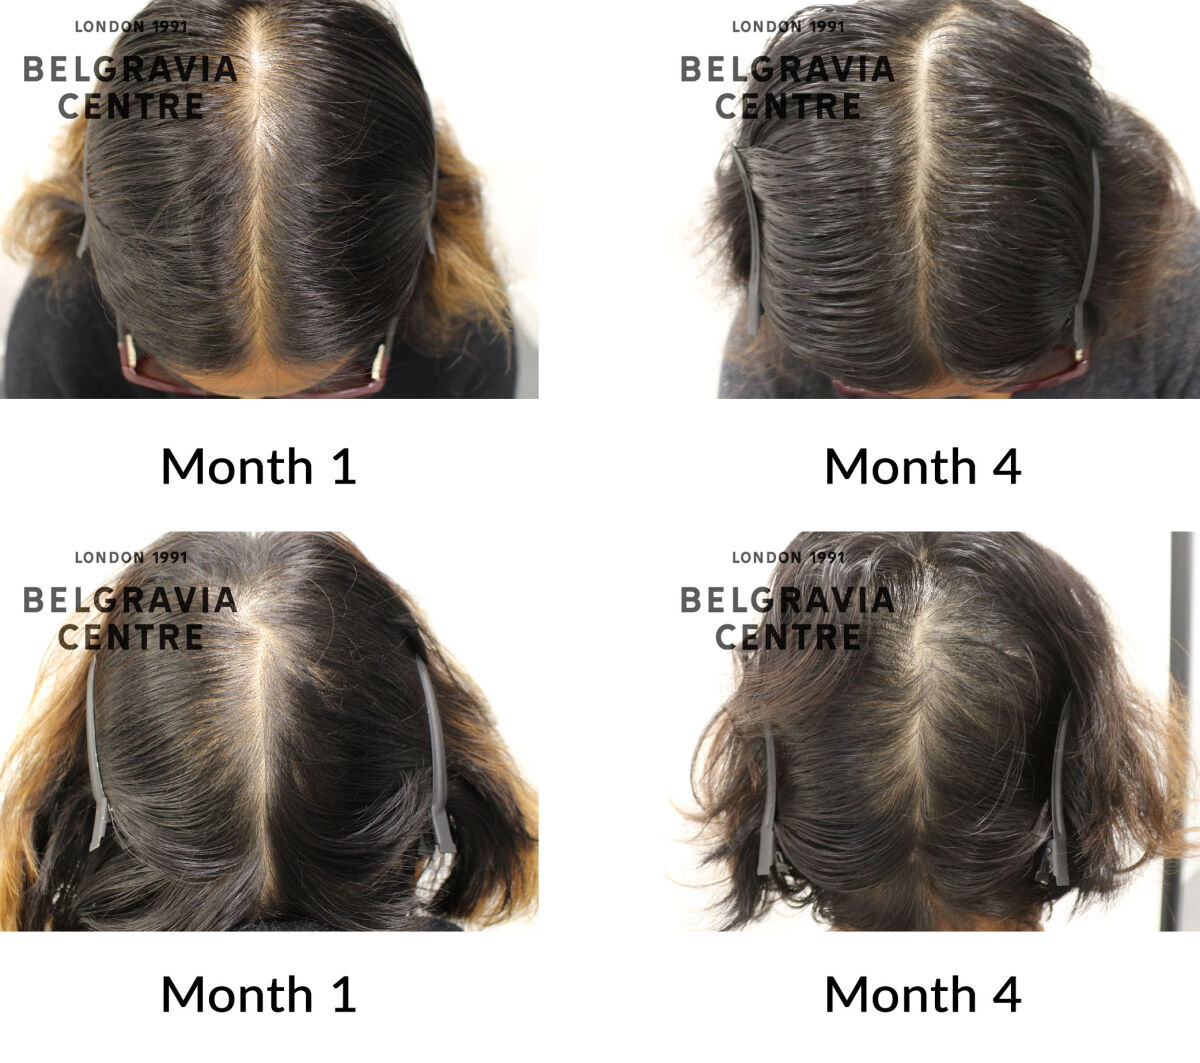 female pattern hair loss the belgravia centre 446263